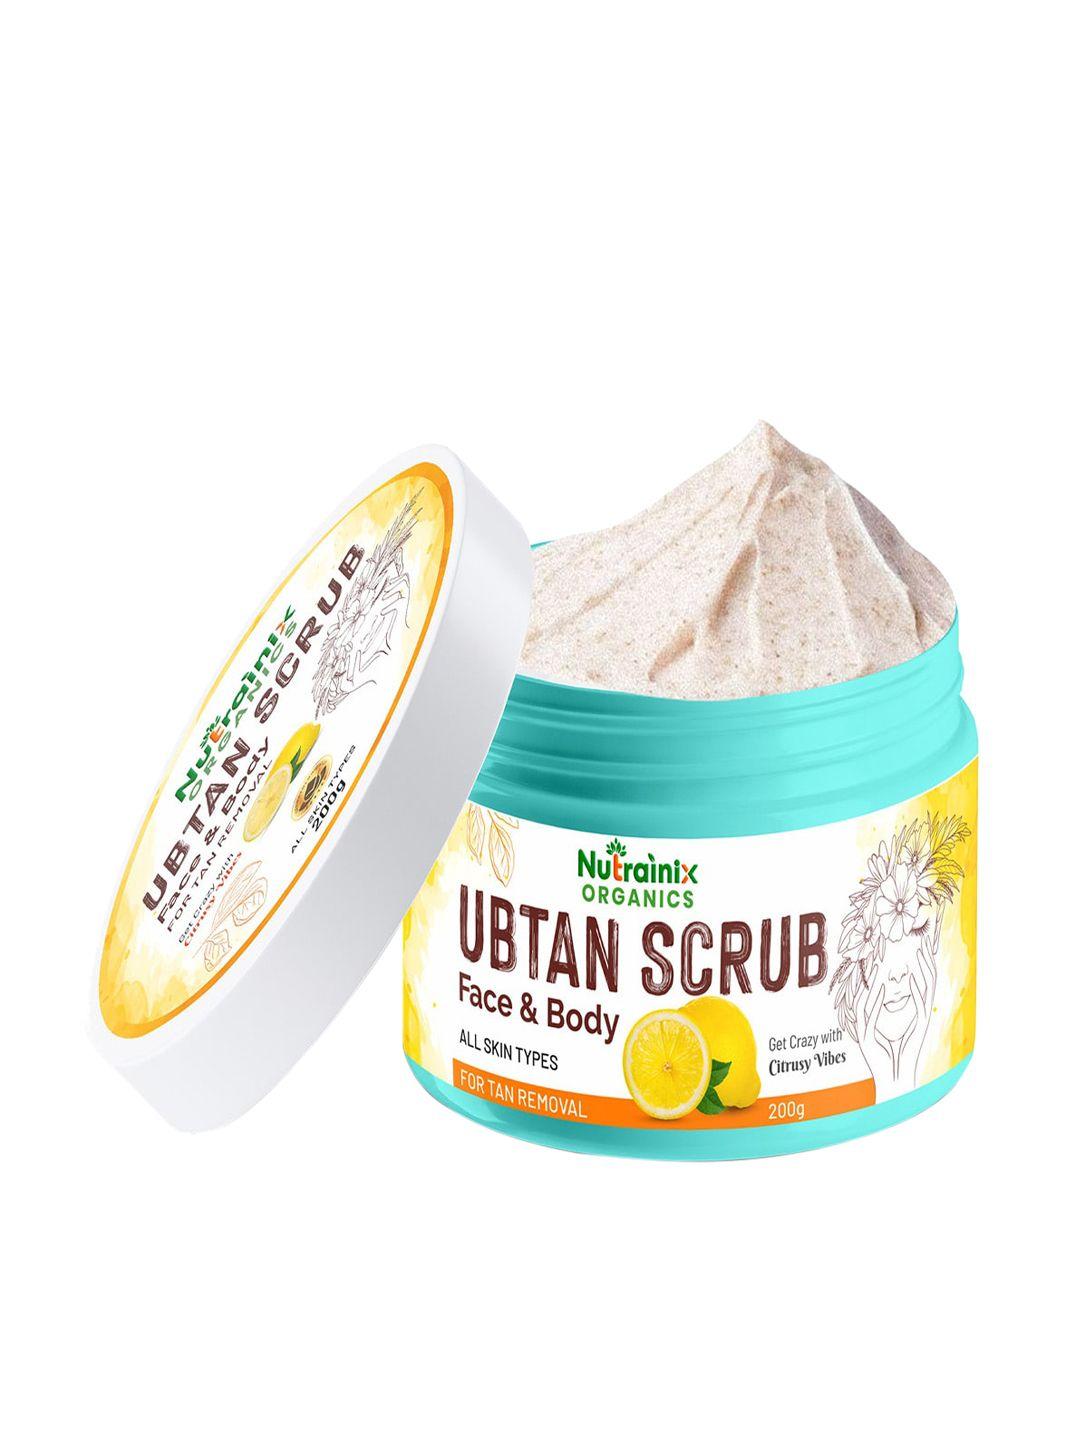 nutrainix organics peach ubtan body polishing scrub reduces cellulite and tan removal - 200g